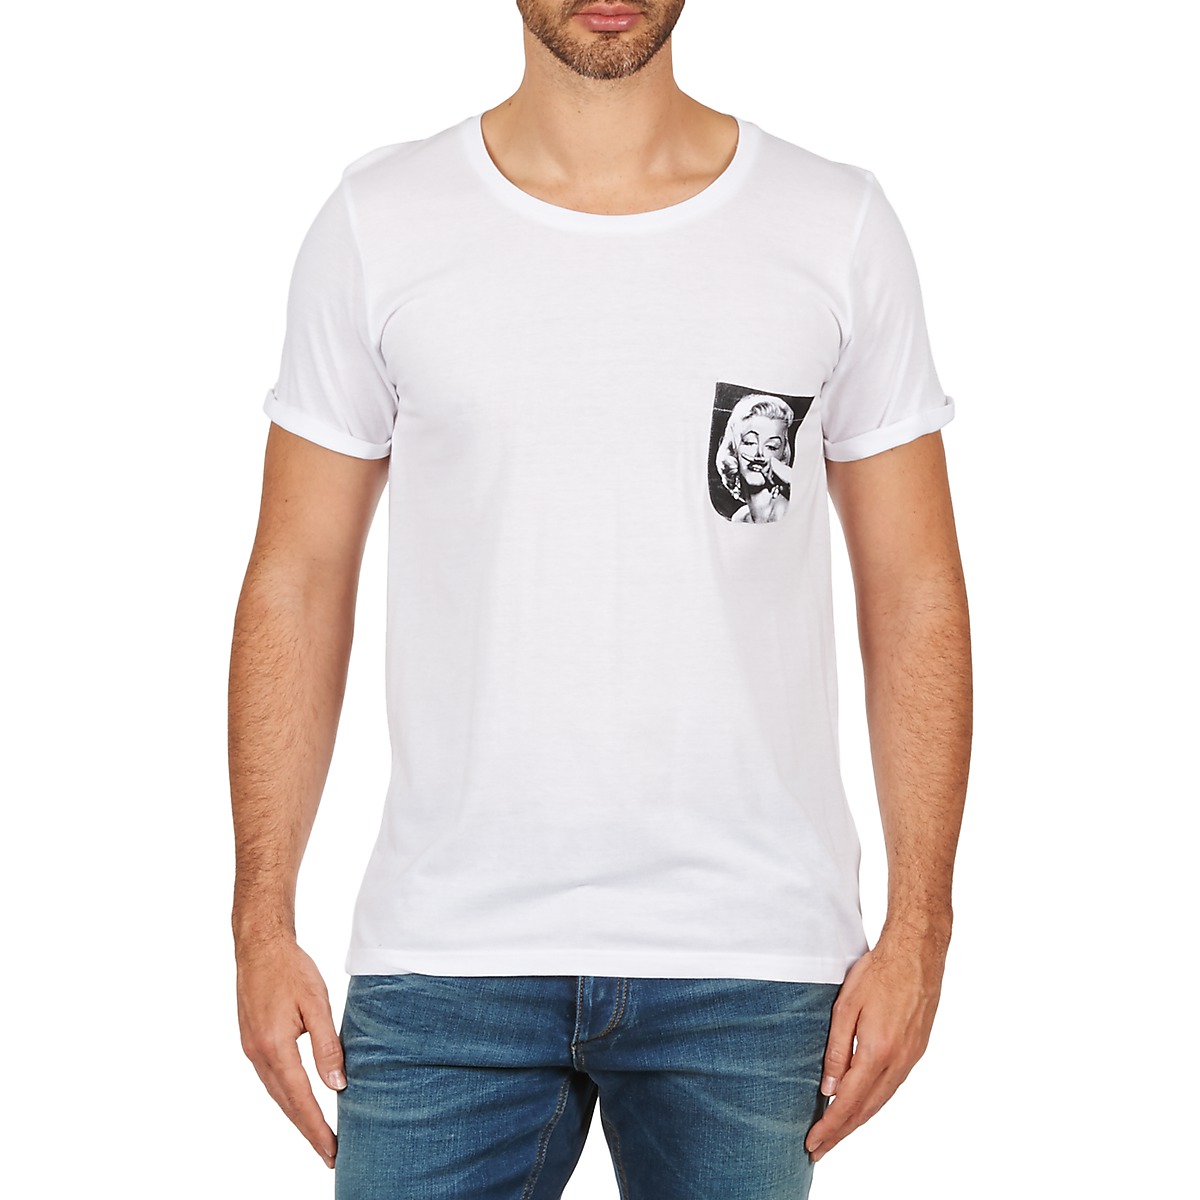 Textiel Heren T-shirts korte mouwen Eleven Paris MARYLINPOCK MEN Wit